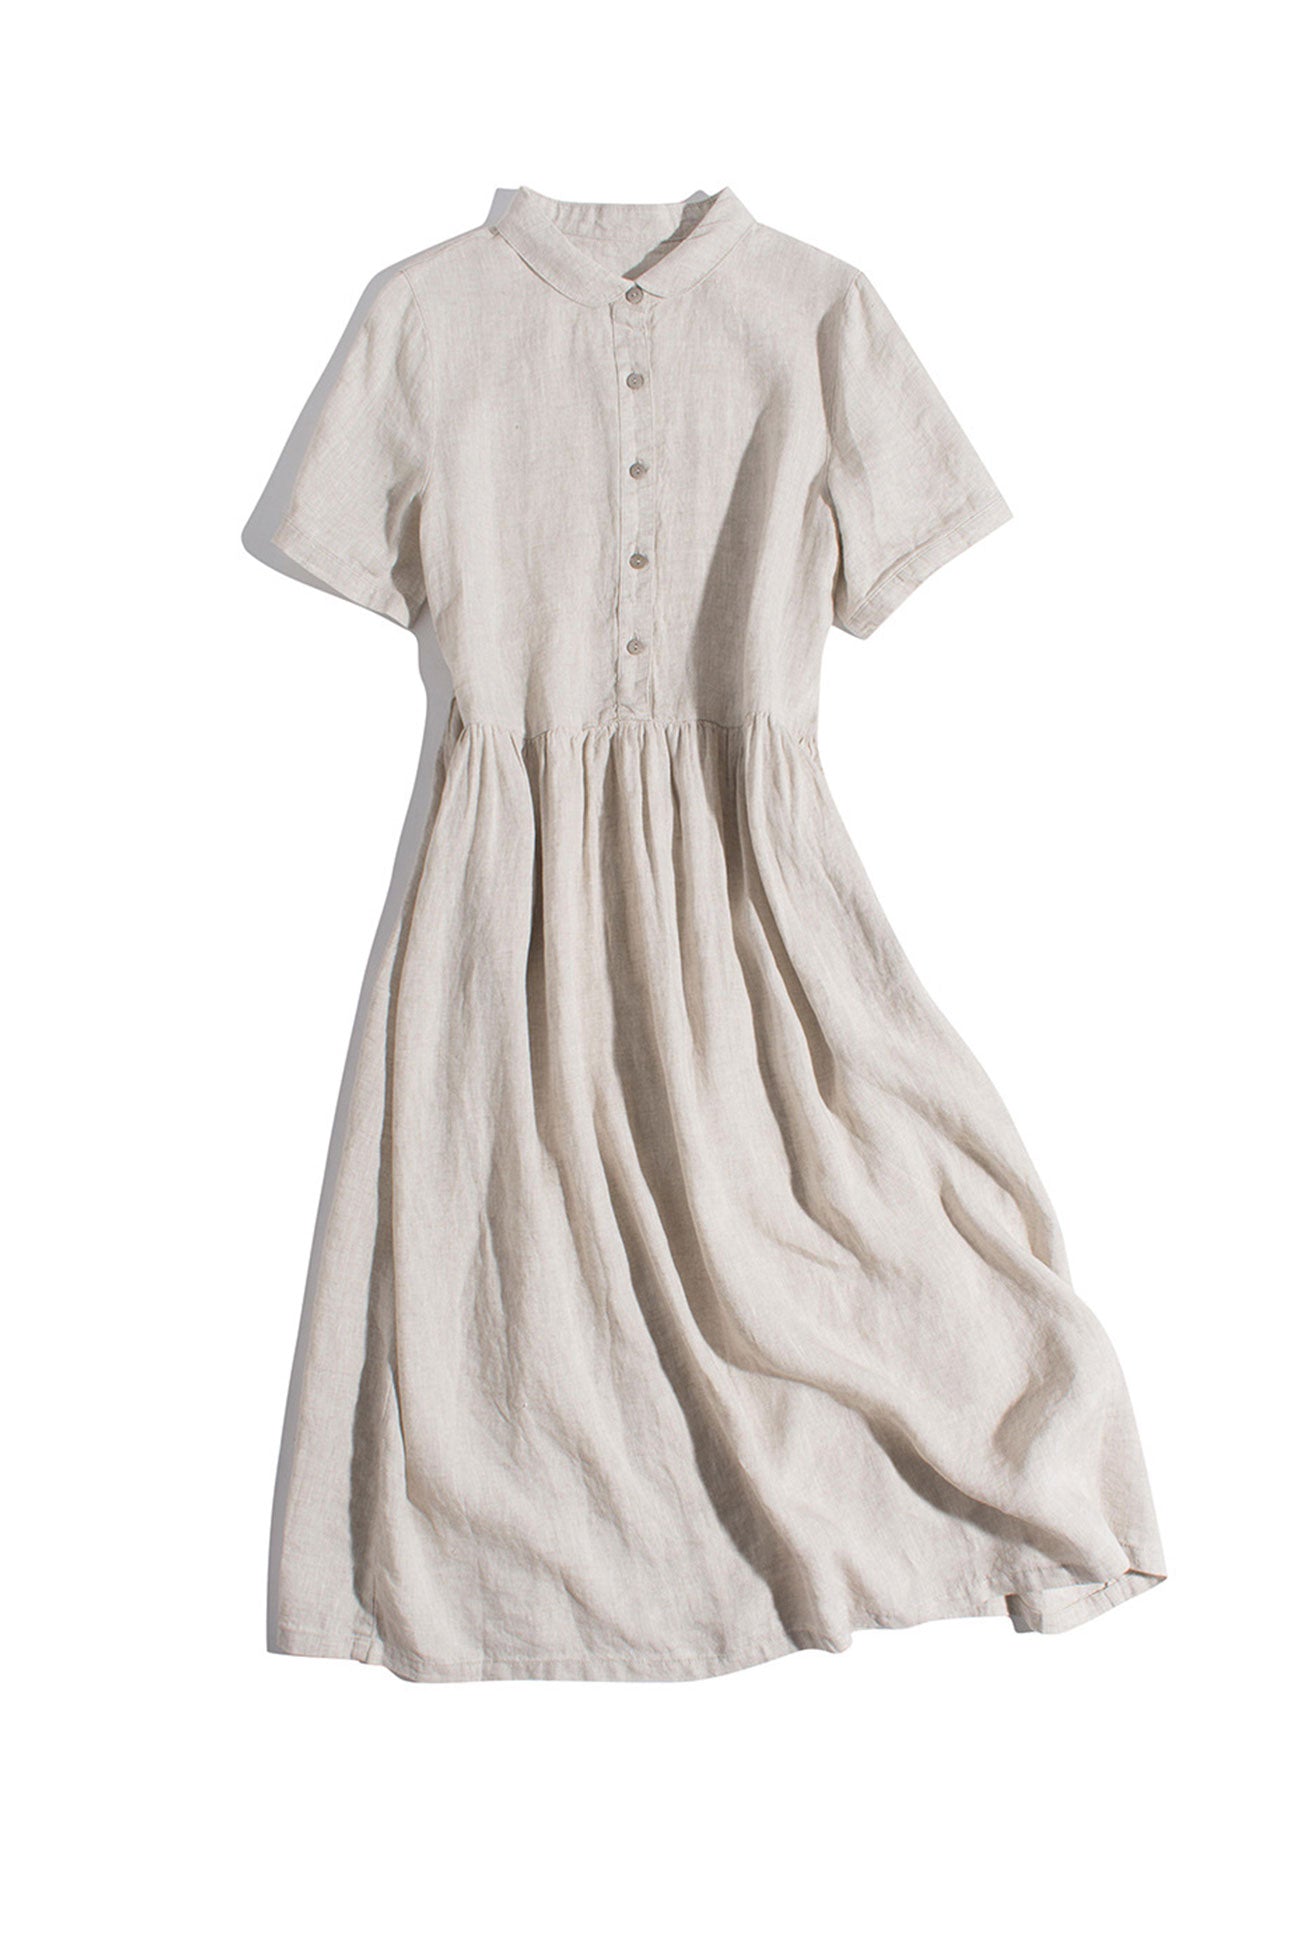 Daisy Slouchy Linen Dress